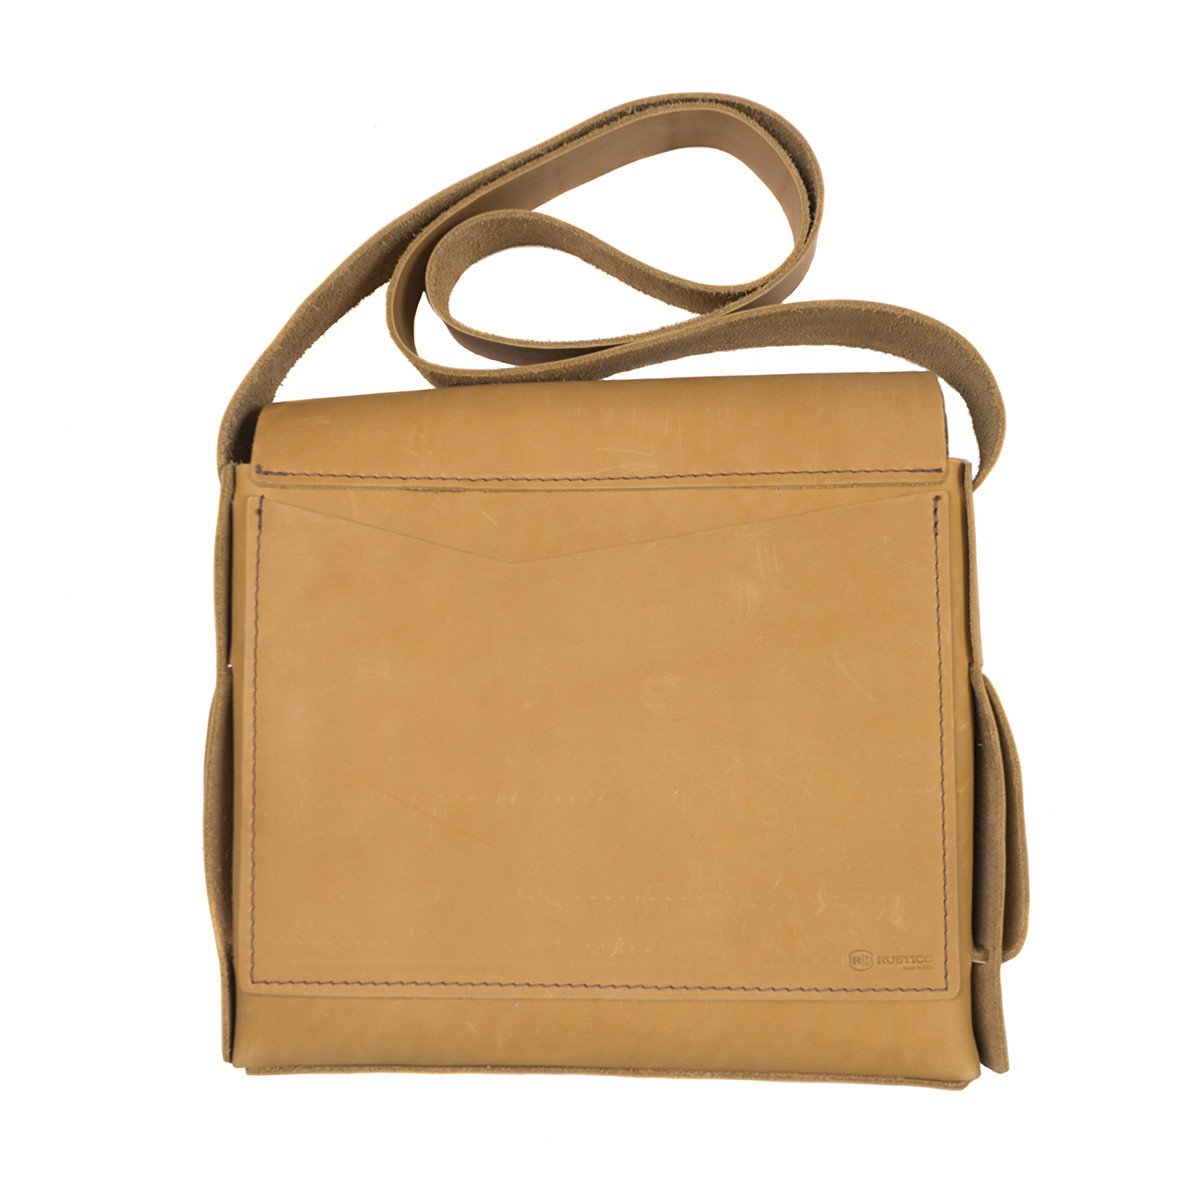 Buckskin purse | Finished purse from Elaine Snyder's Buckski… | Flickr